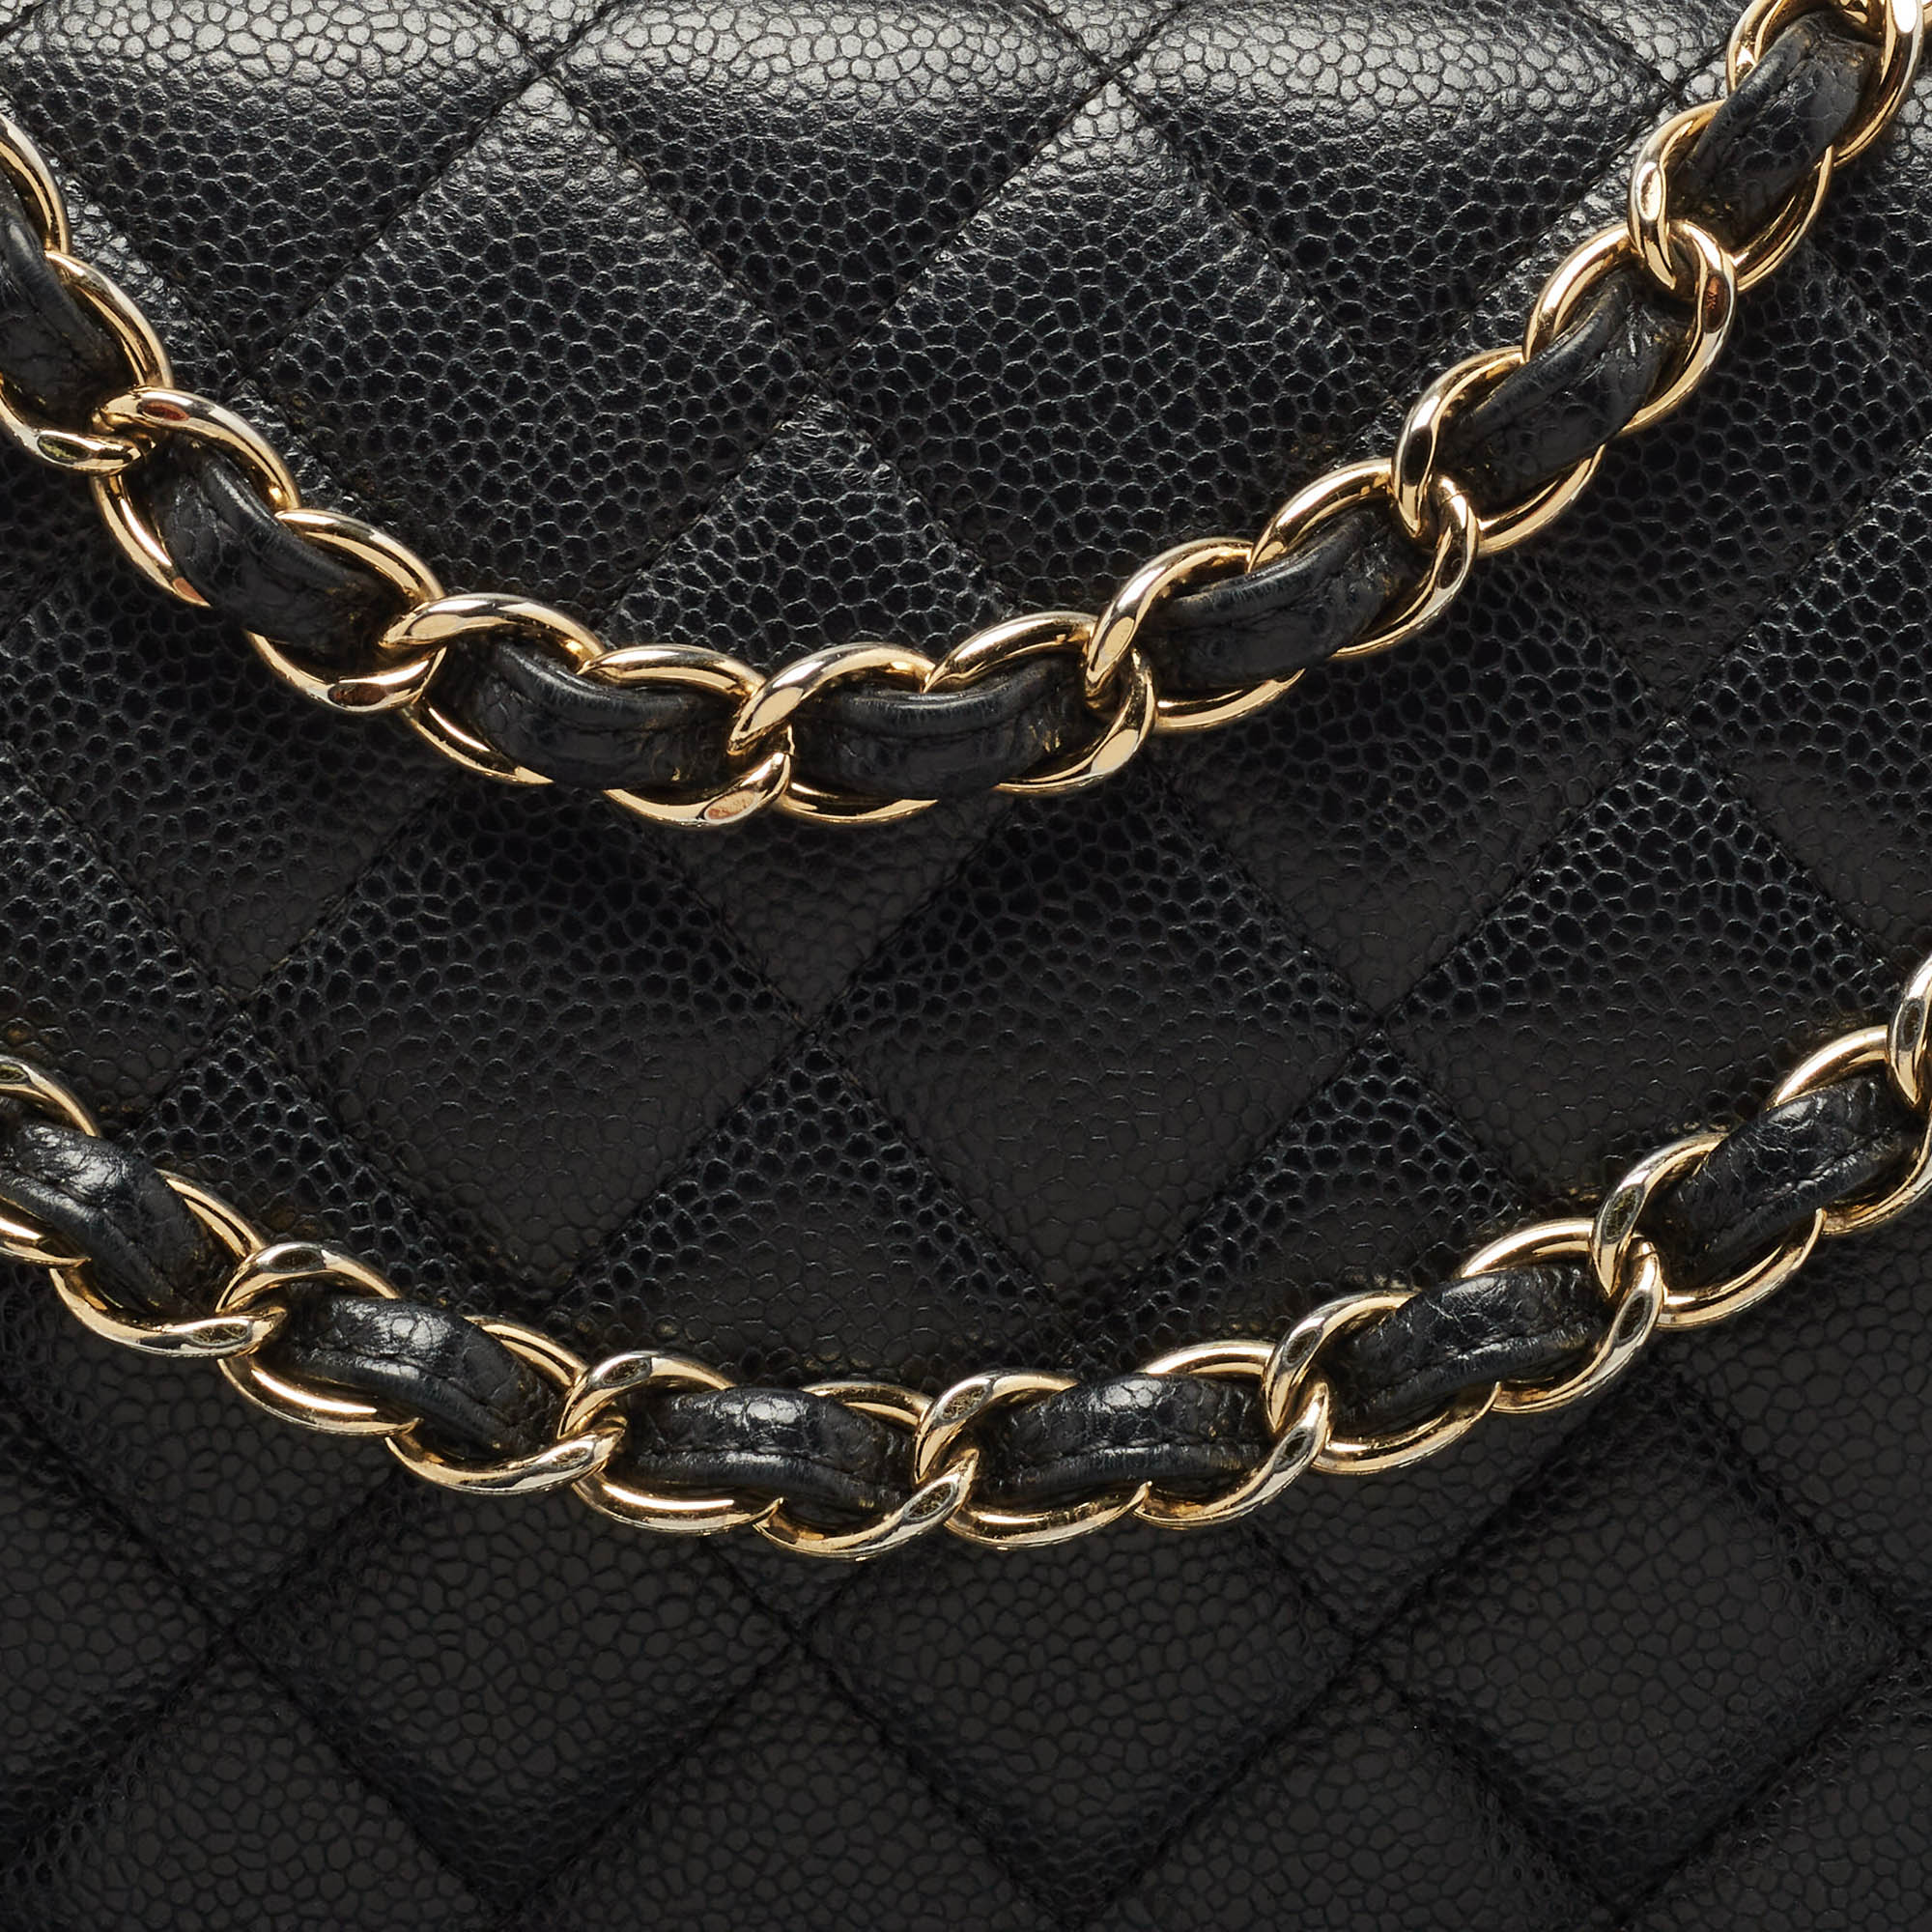 Chanel Black Caviar Leather Maxi Classic Double Flap Bag